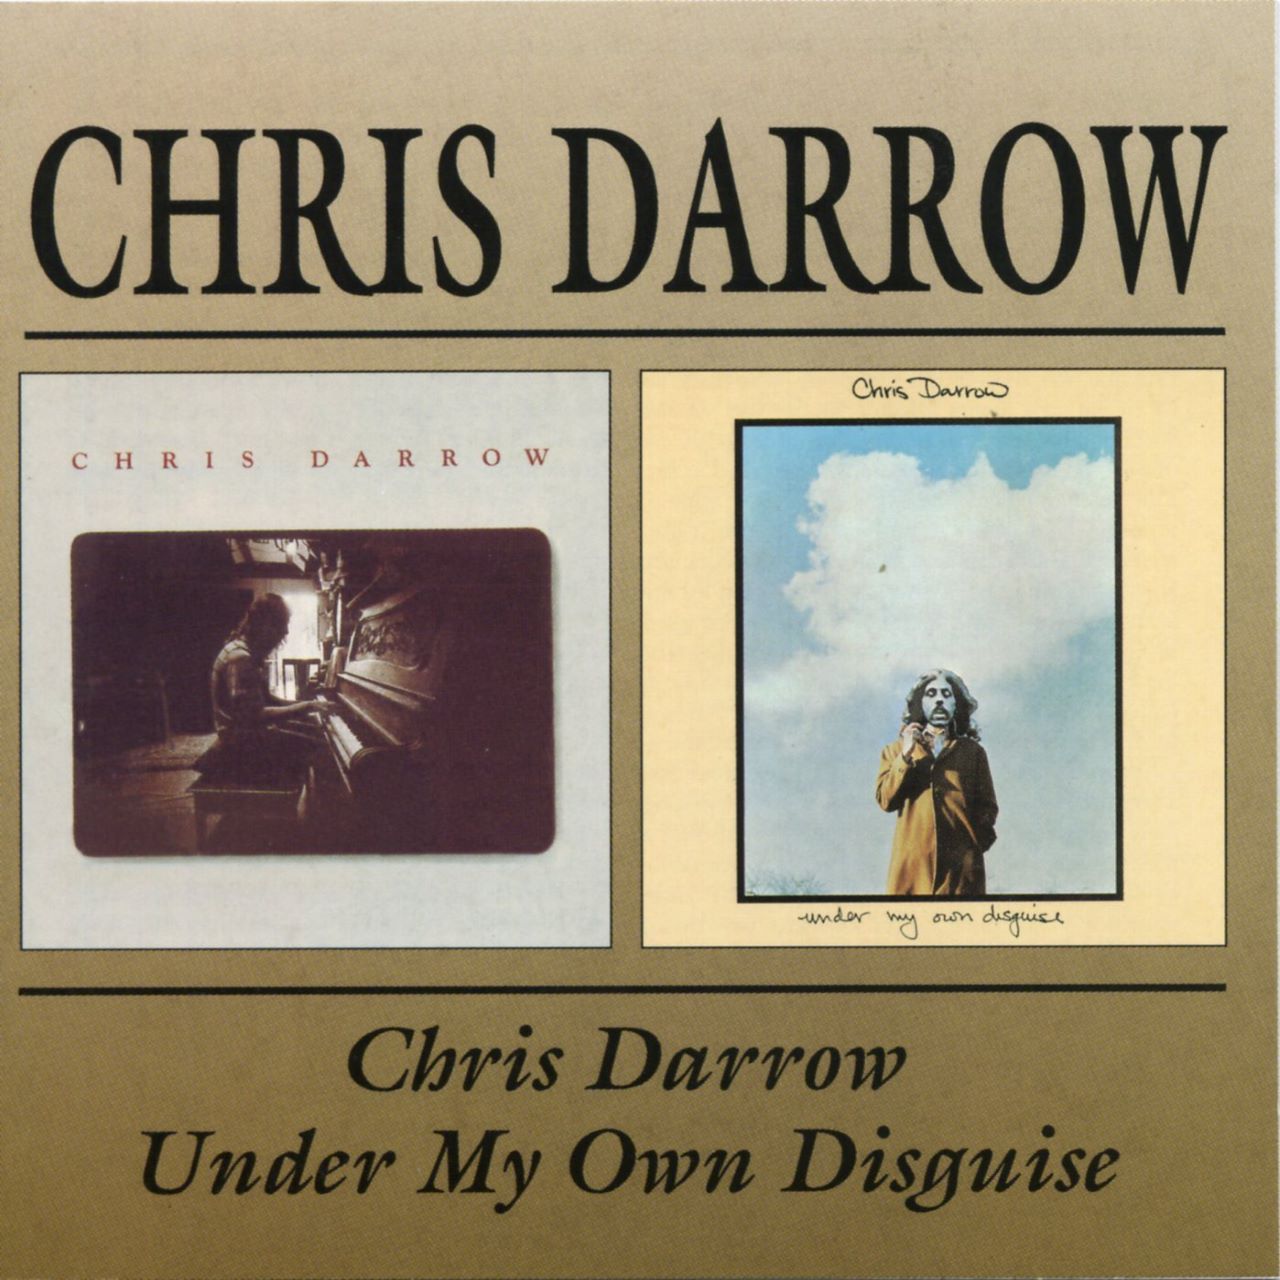 Chris Darrow - Chris Darrow-Under My Own Disguise cover album